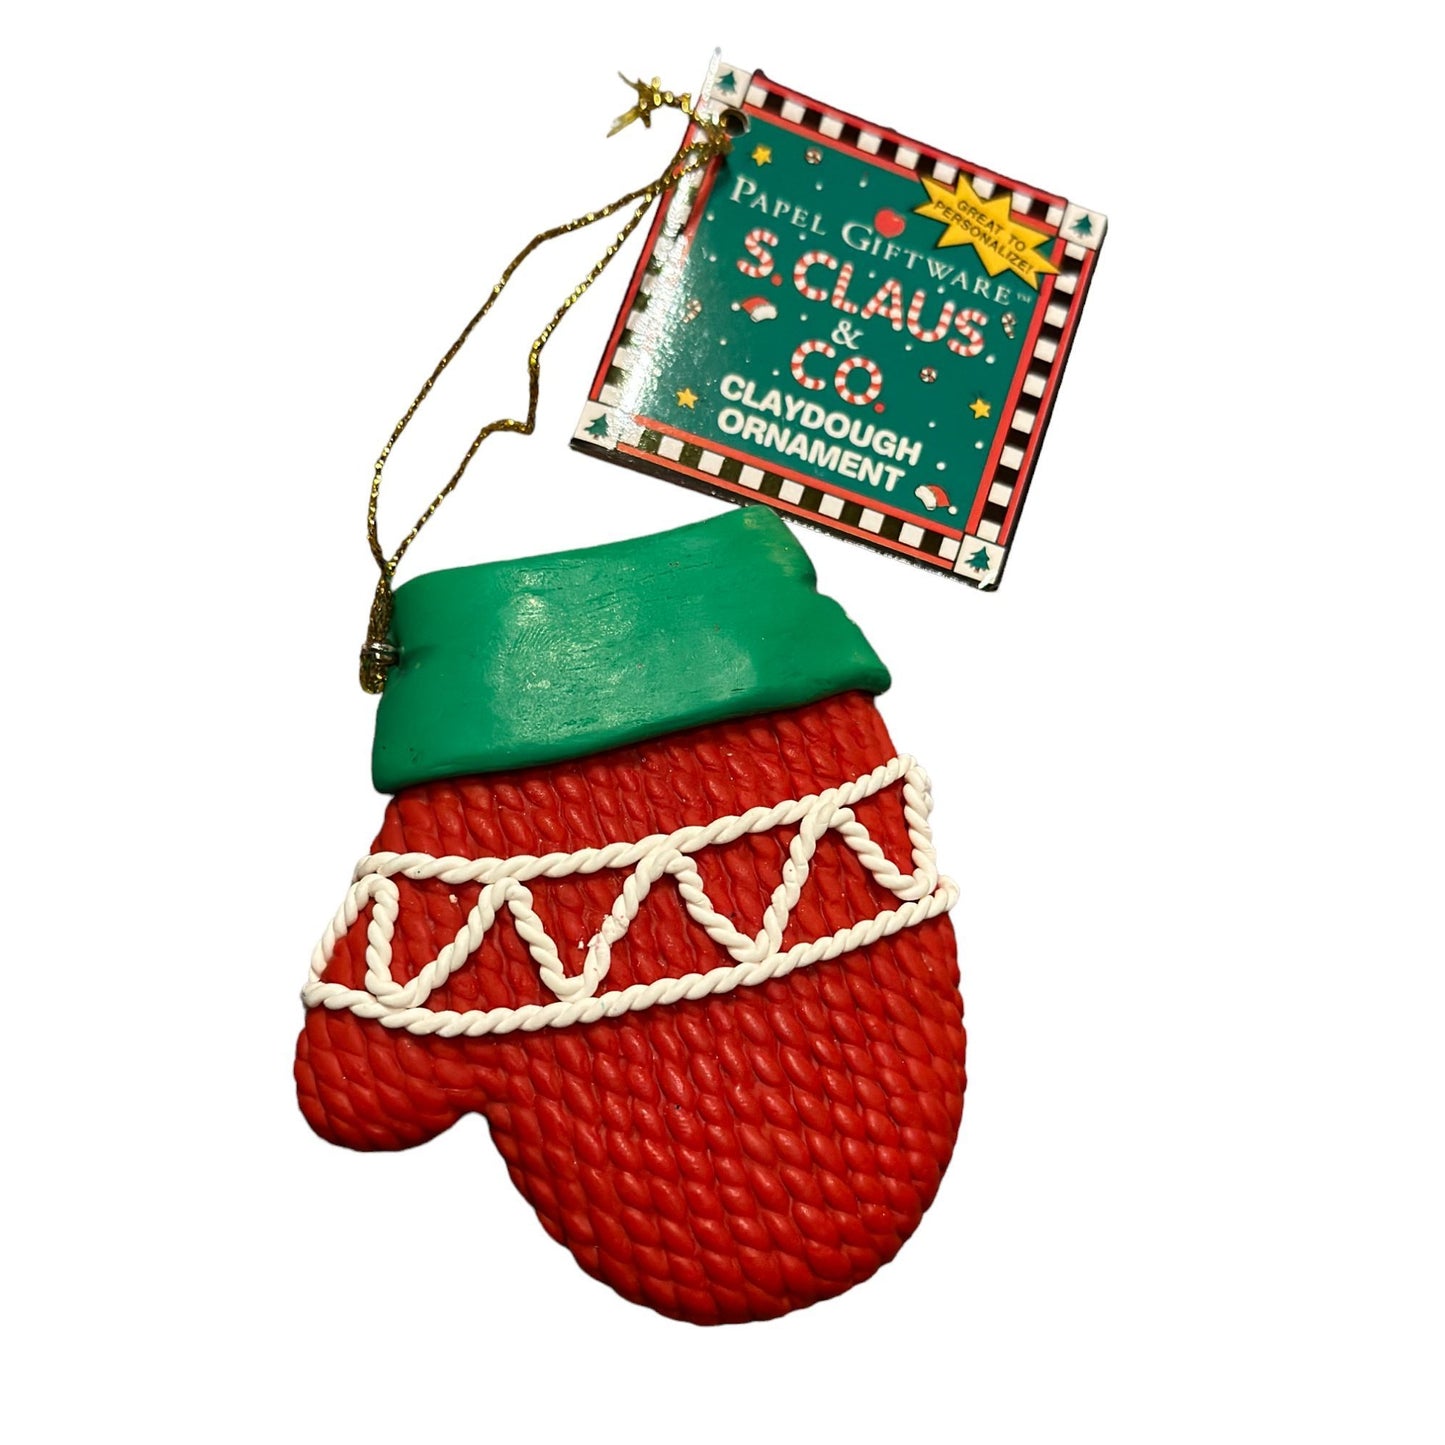 Vintage Papel Giftware Santa Claus & Co.Claydough Ornament Hat & Gloves Lot of 3